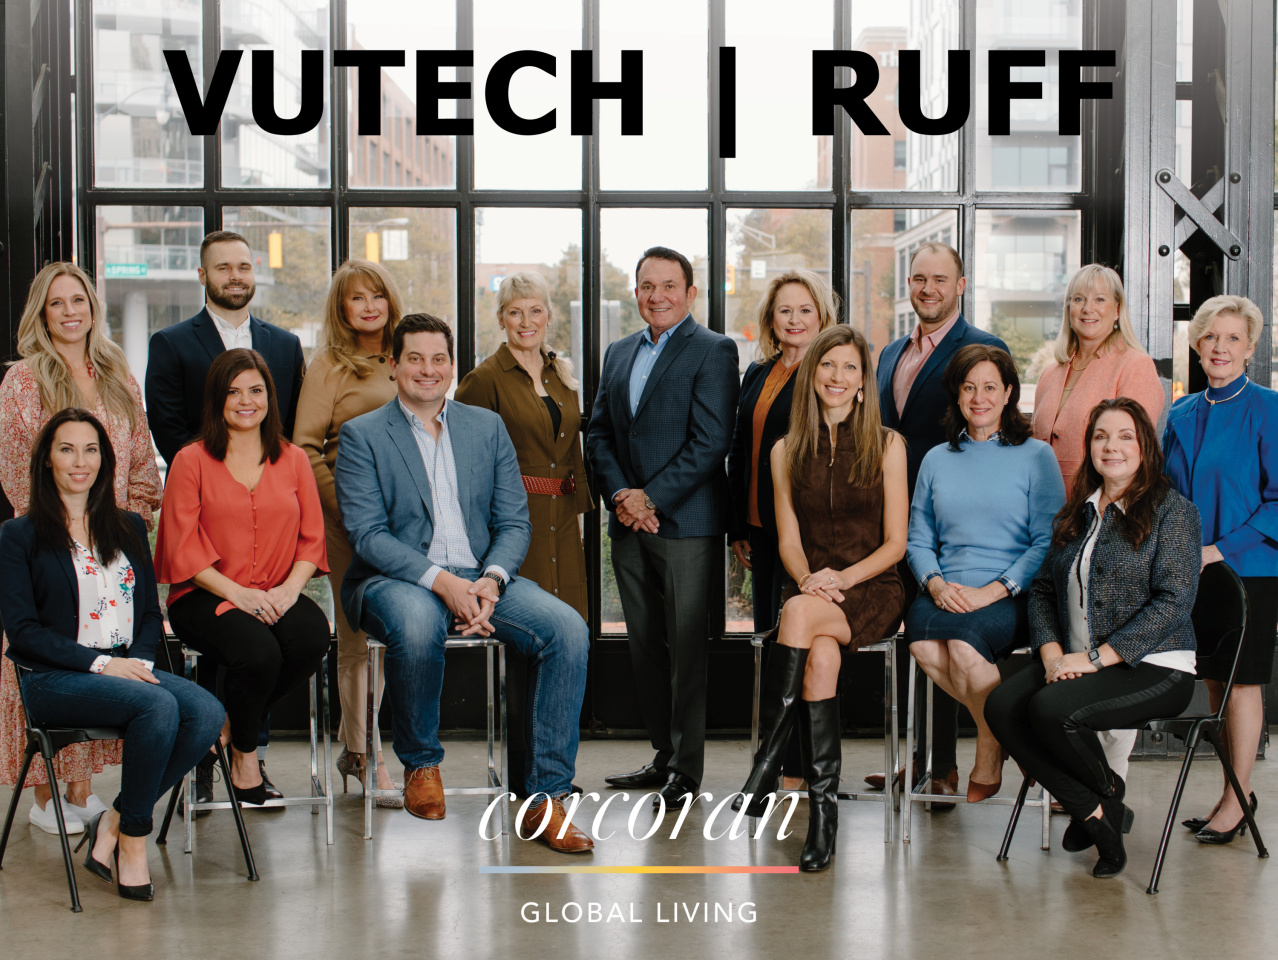 Vutech | Ruff Joins Corcoran Global Living